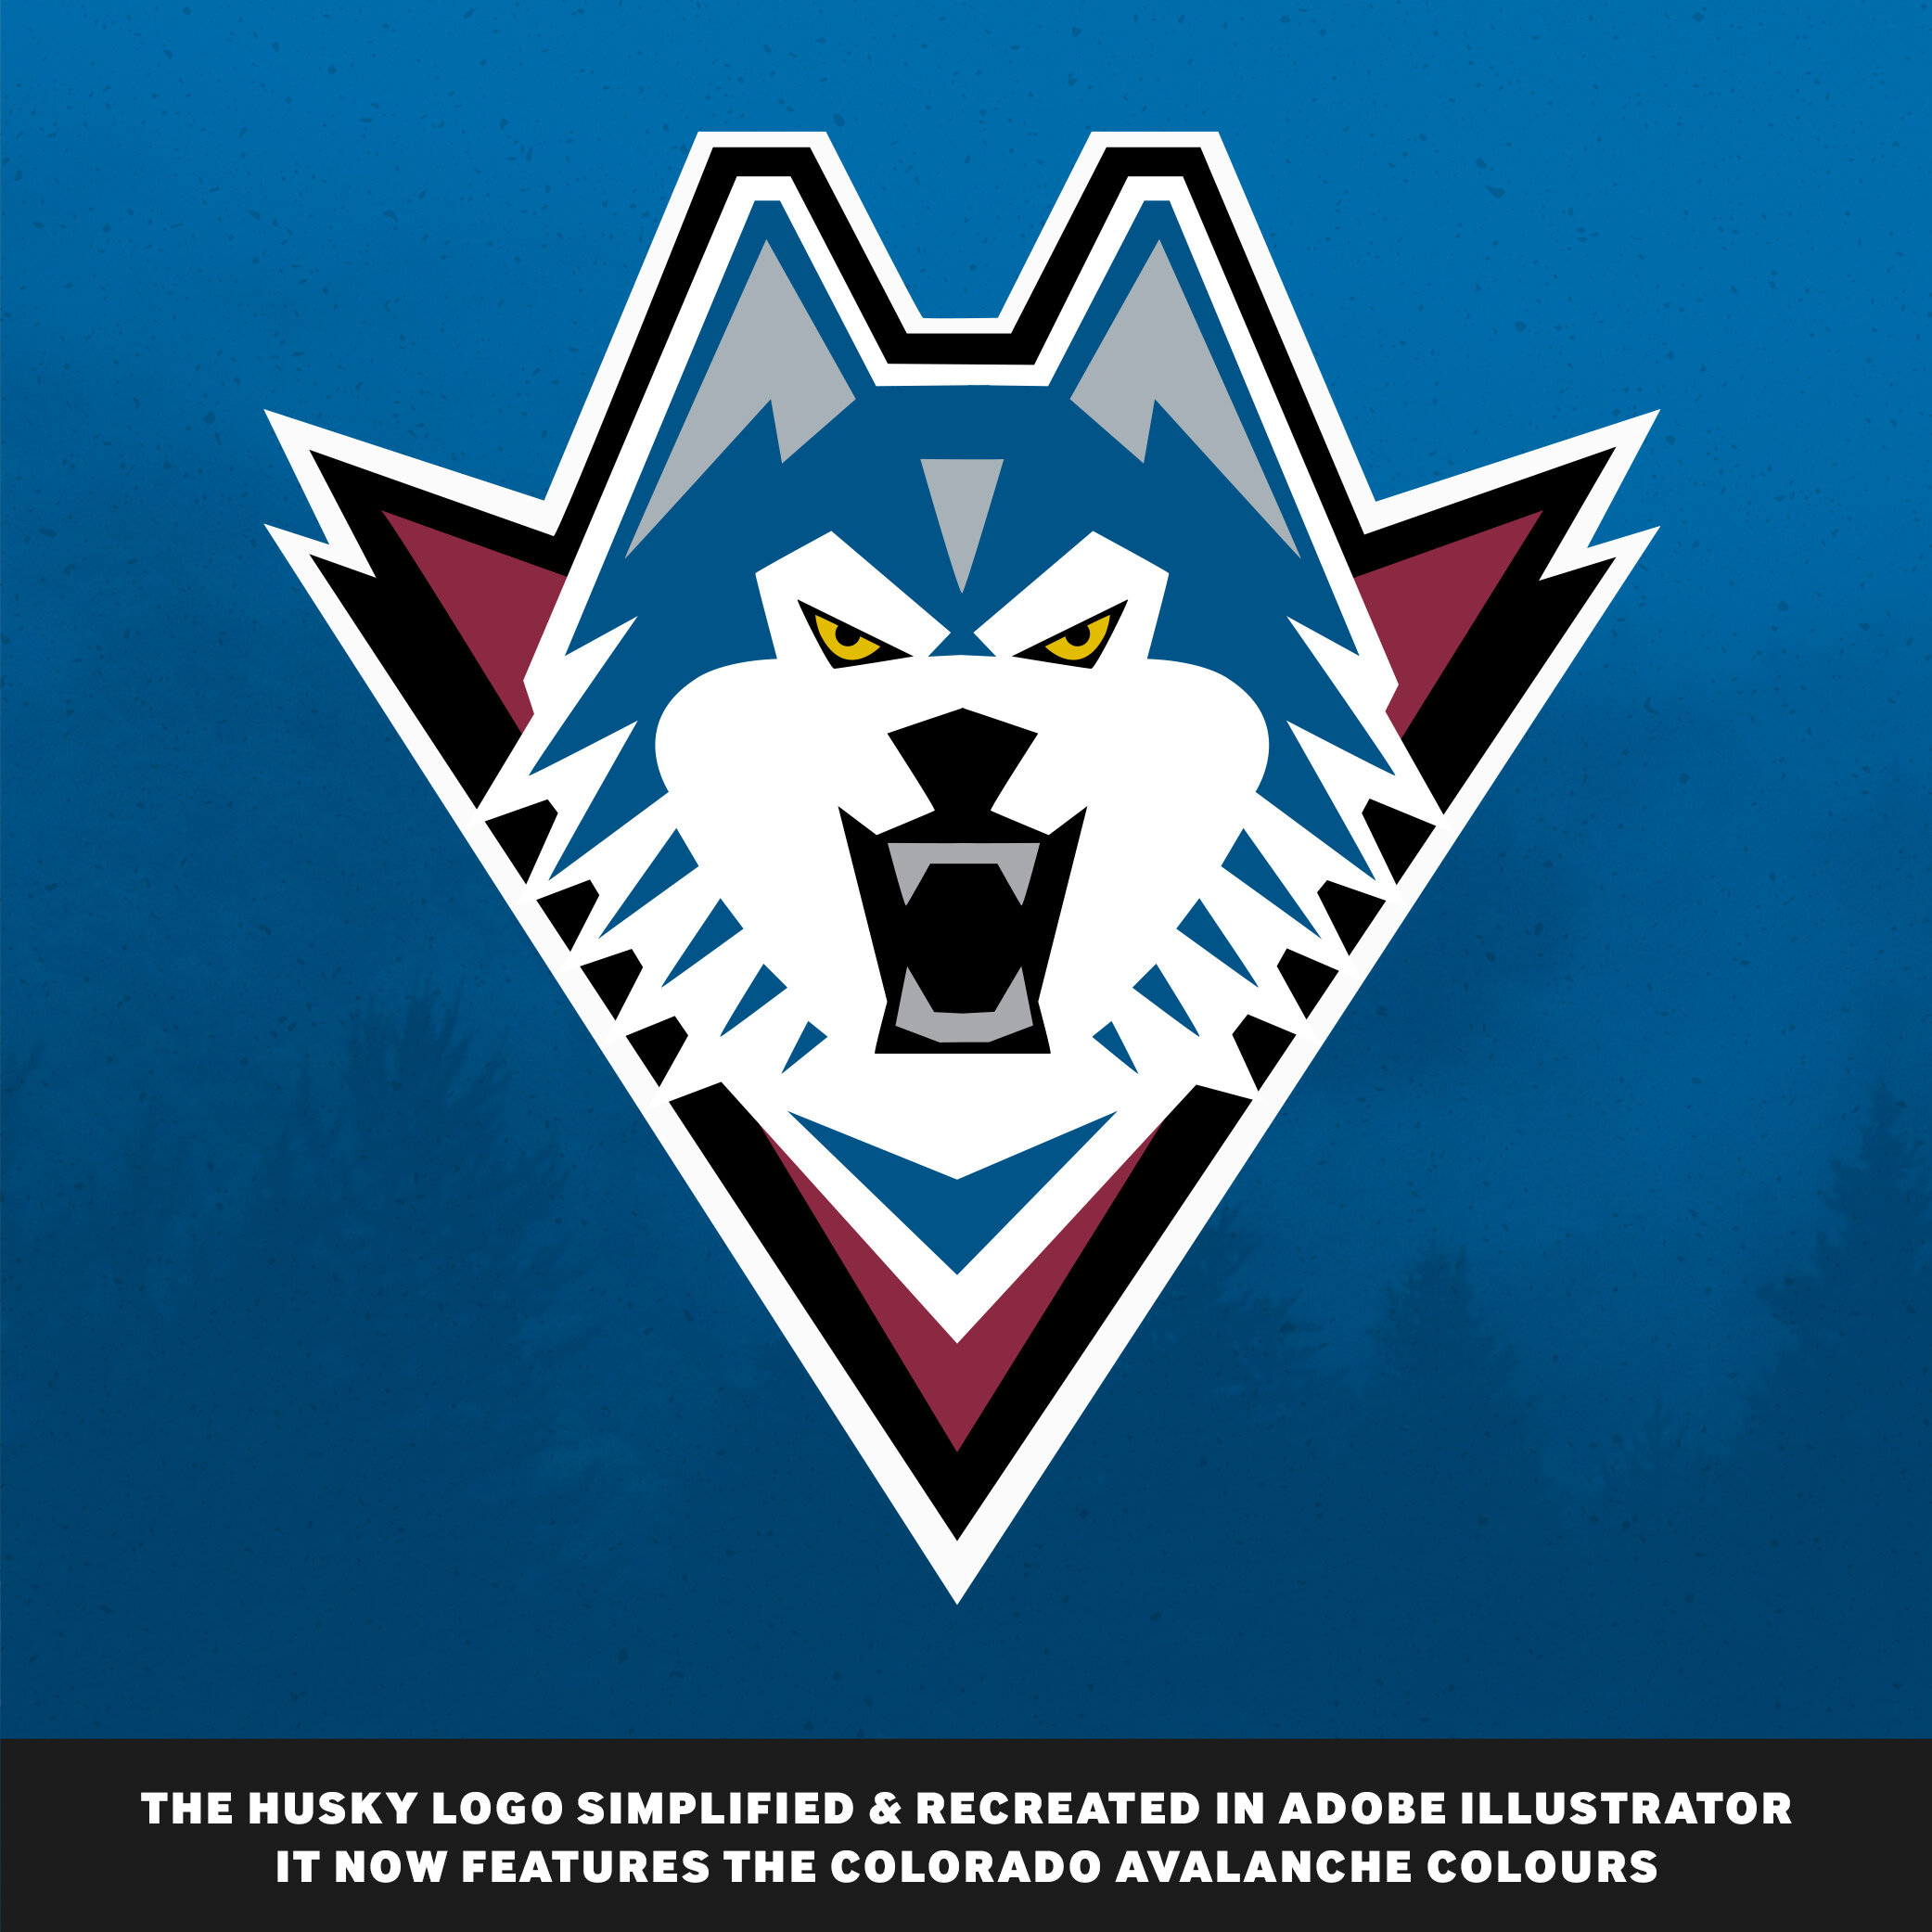 70's Project - Colorado Avalanche jersey & logo concept : r/hockey